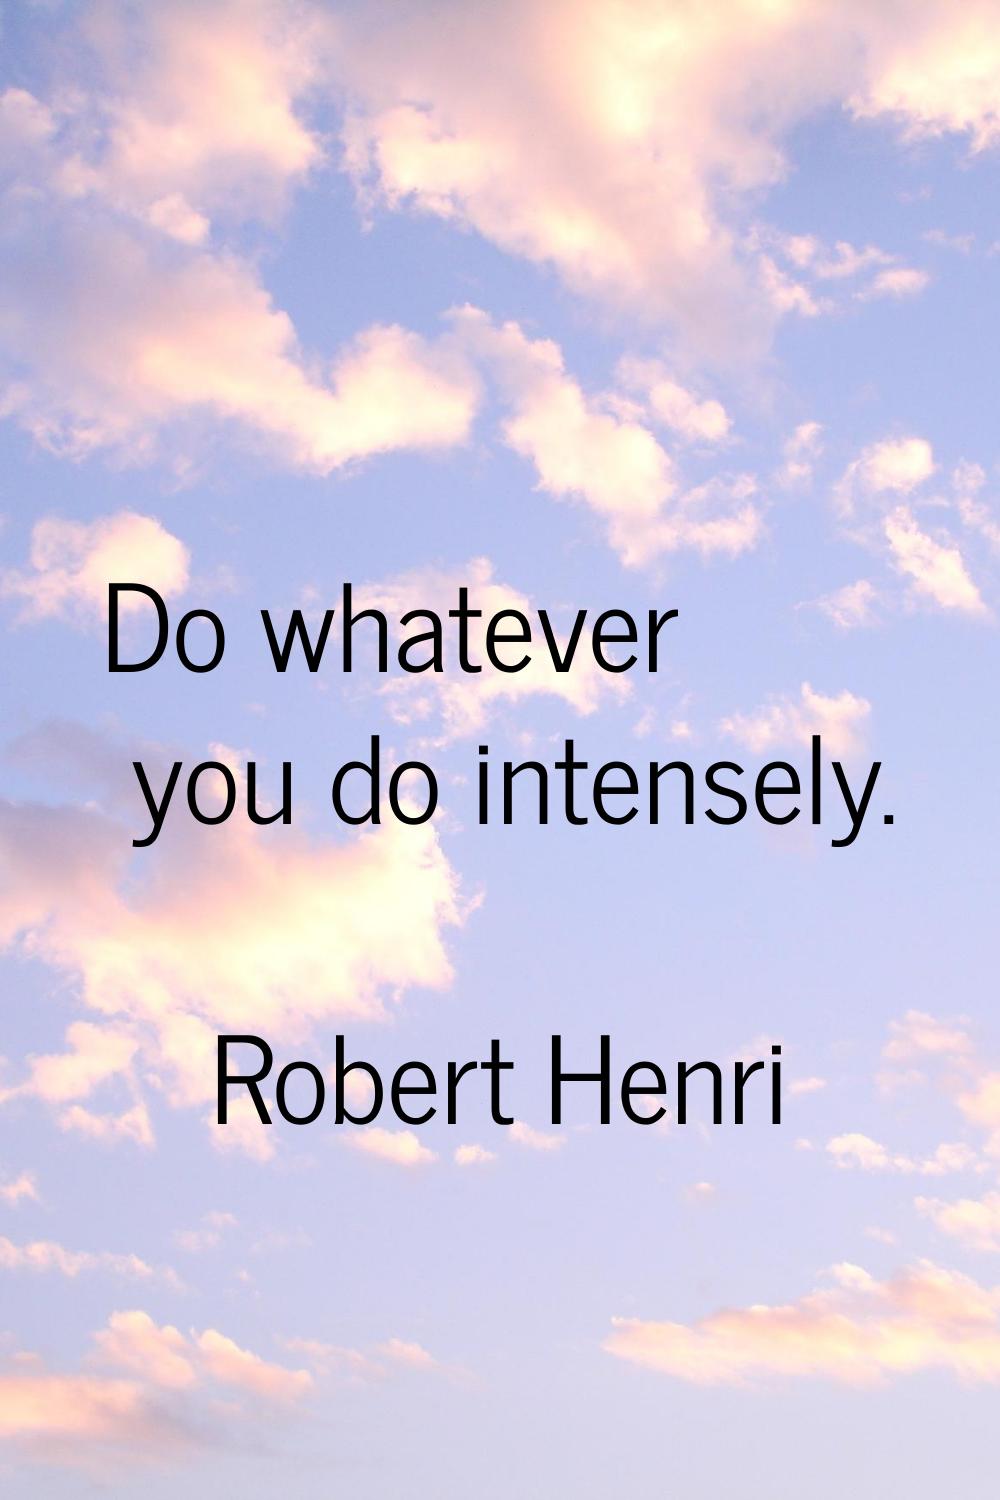 Do whatever you do intensely.